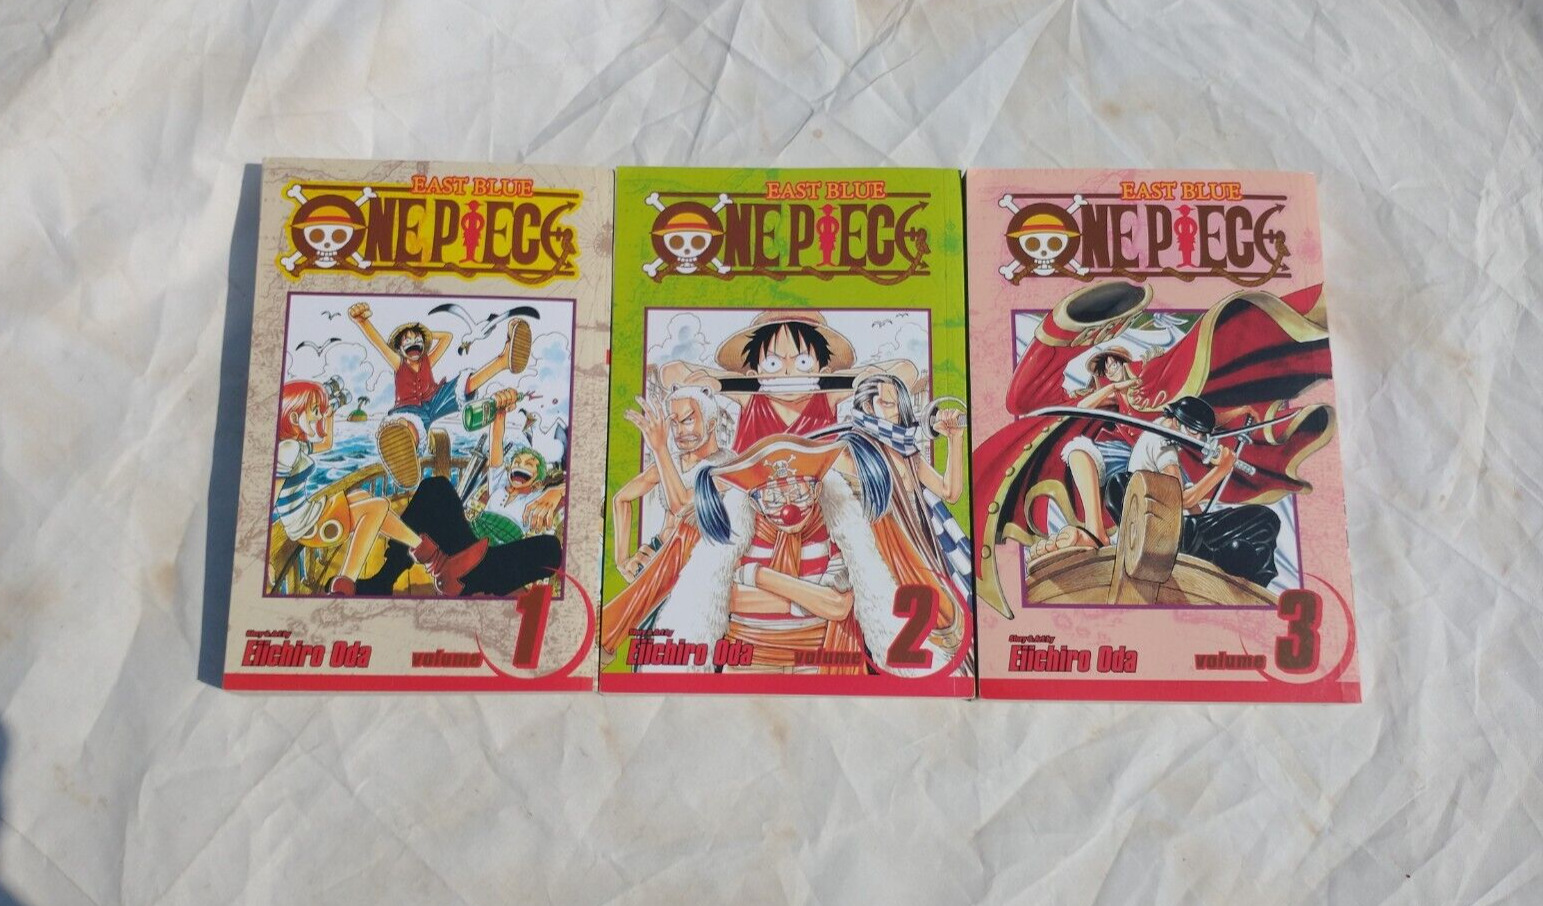 One Piece #1,2, and 3 (VIZ Media)